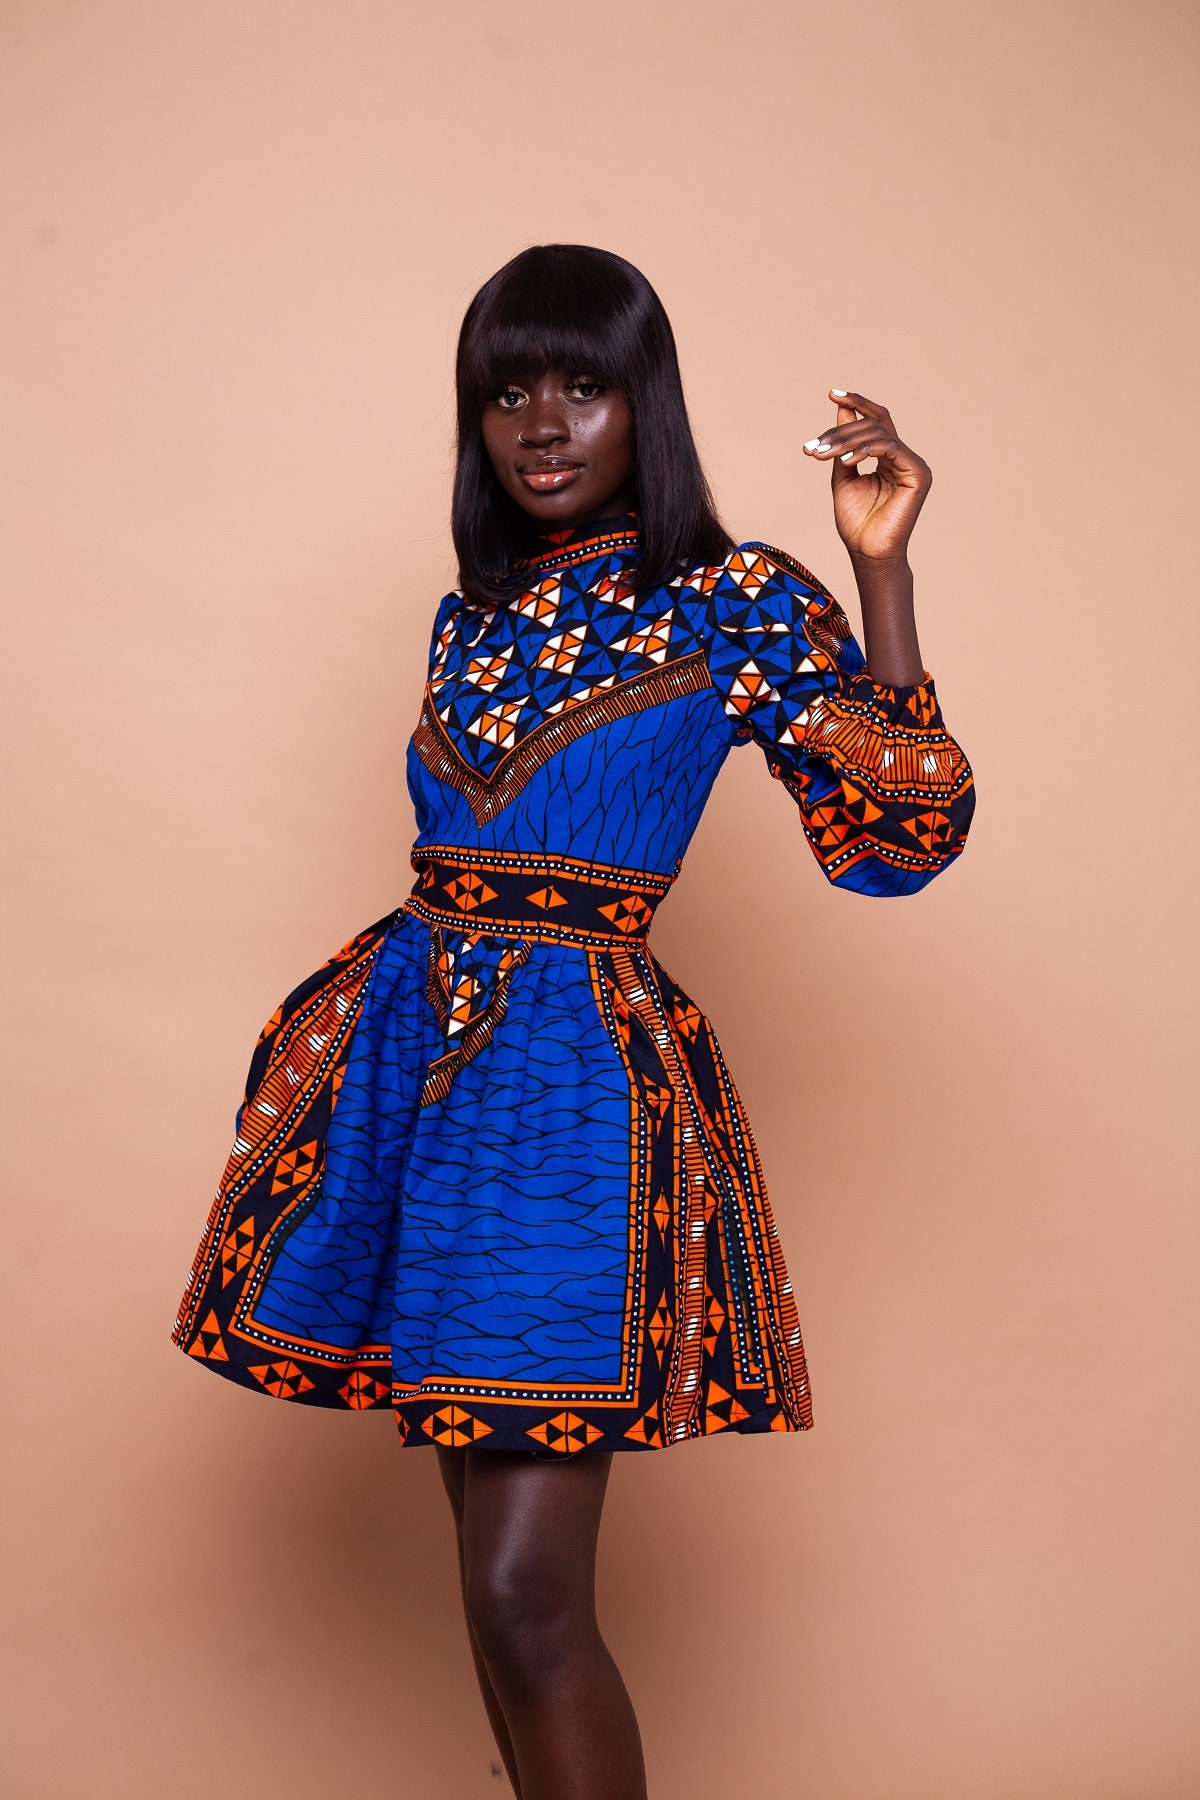 Registyle African Print Ankara Elastic Sewn Dresses UK Sizes 8-16 